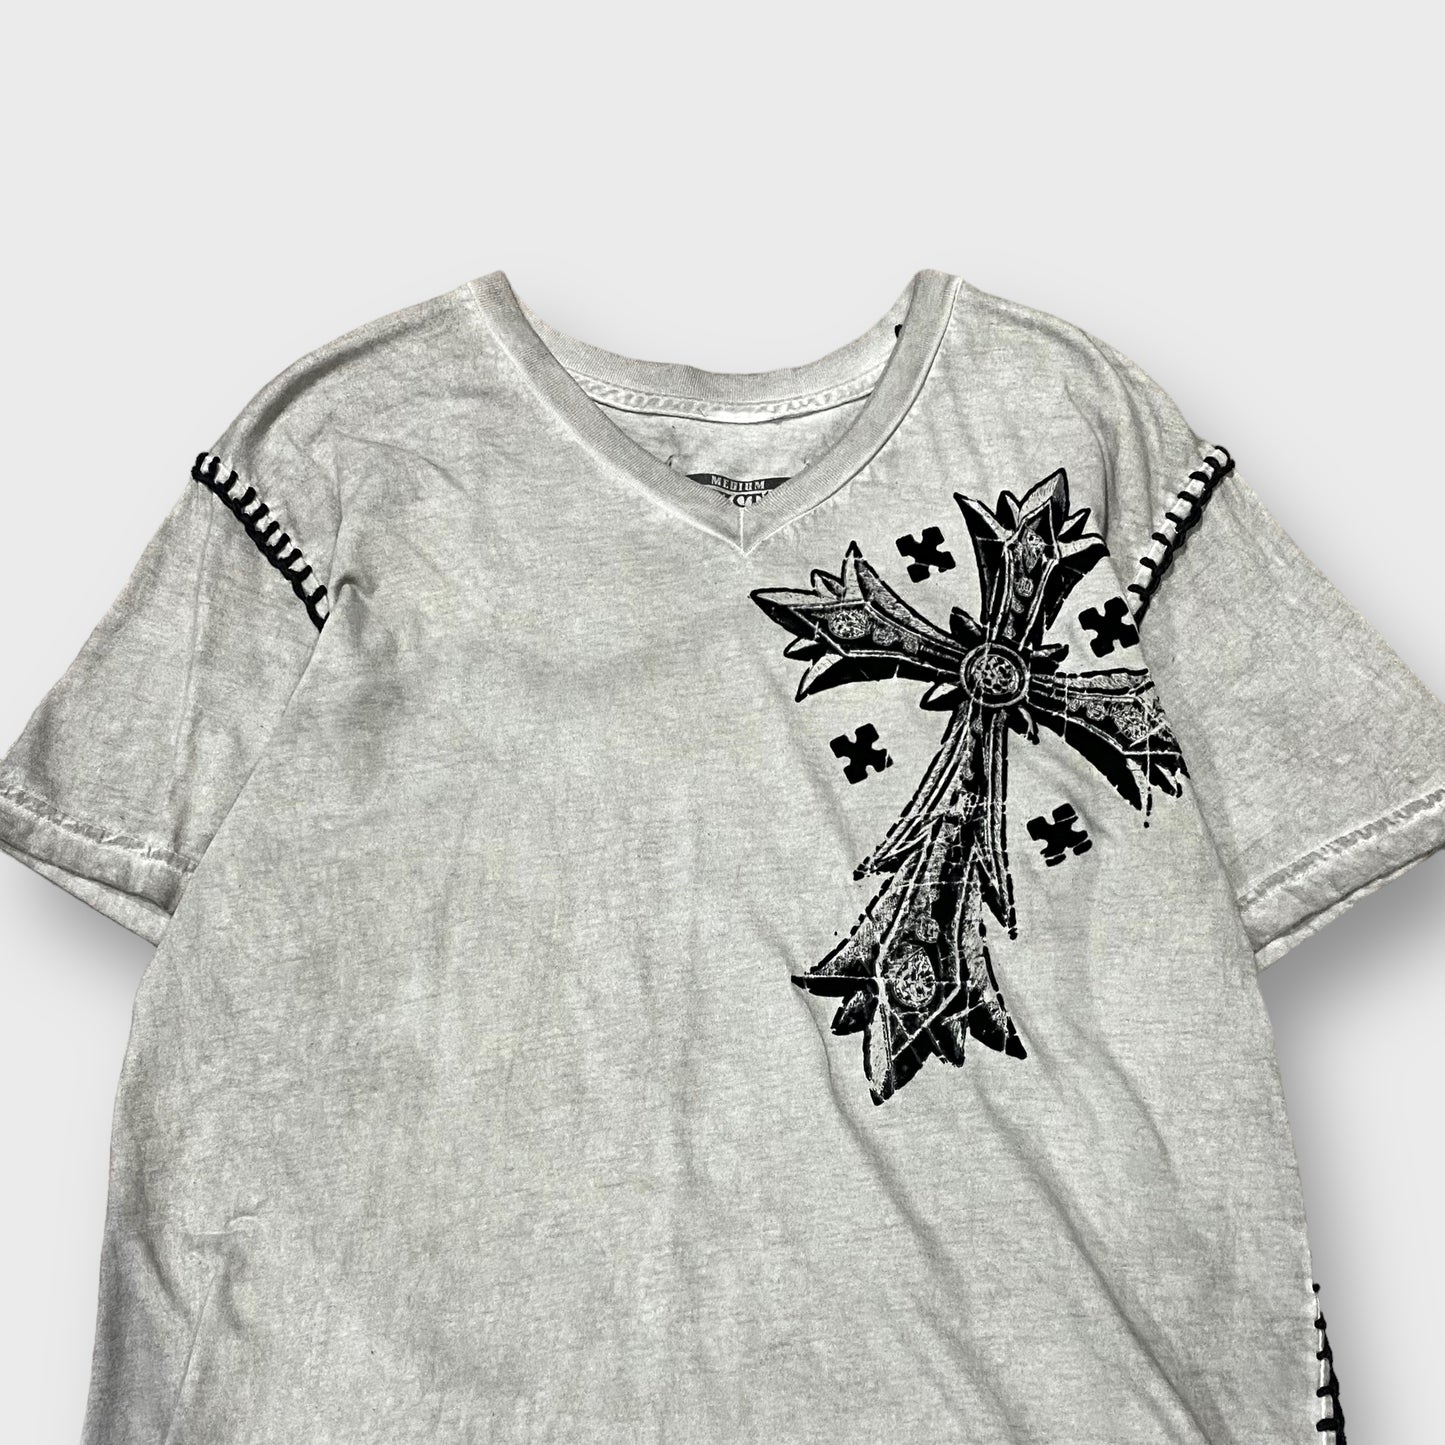 "RAW STATE" Cross design t-shirt